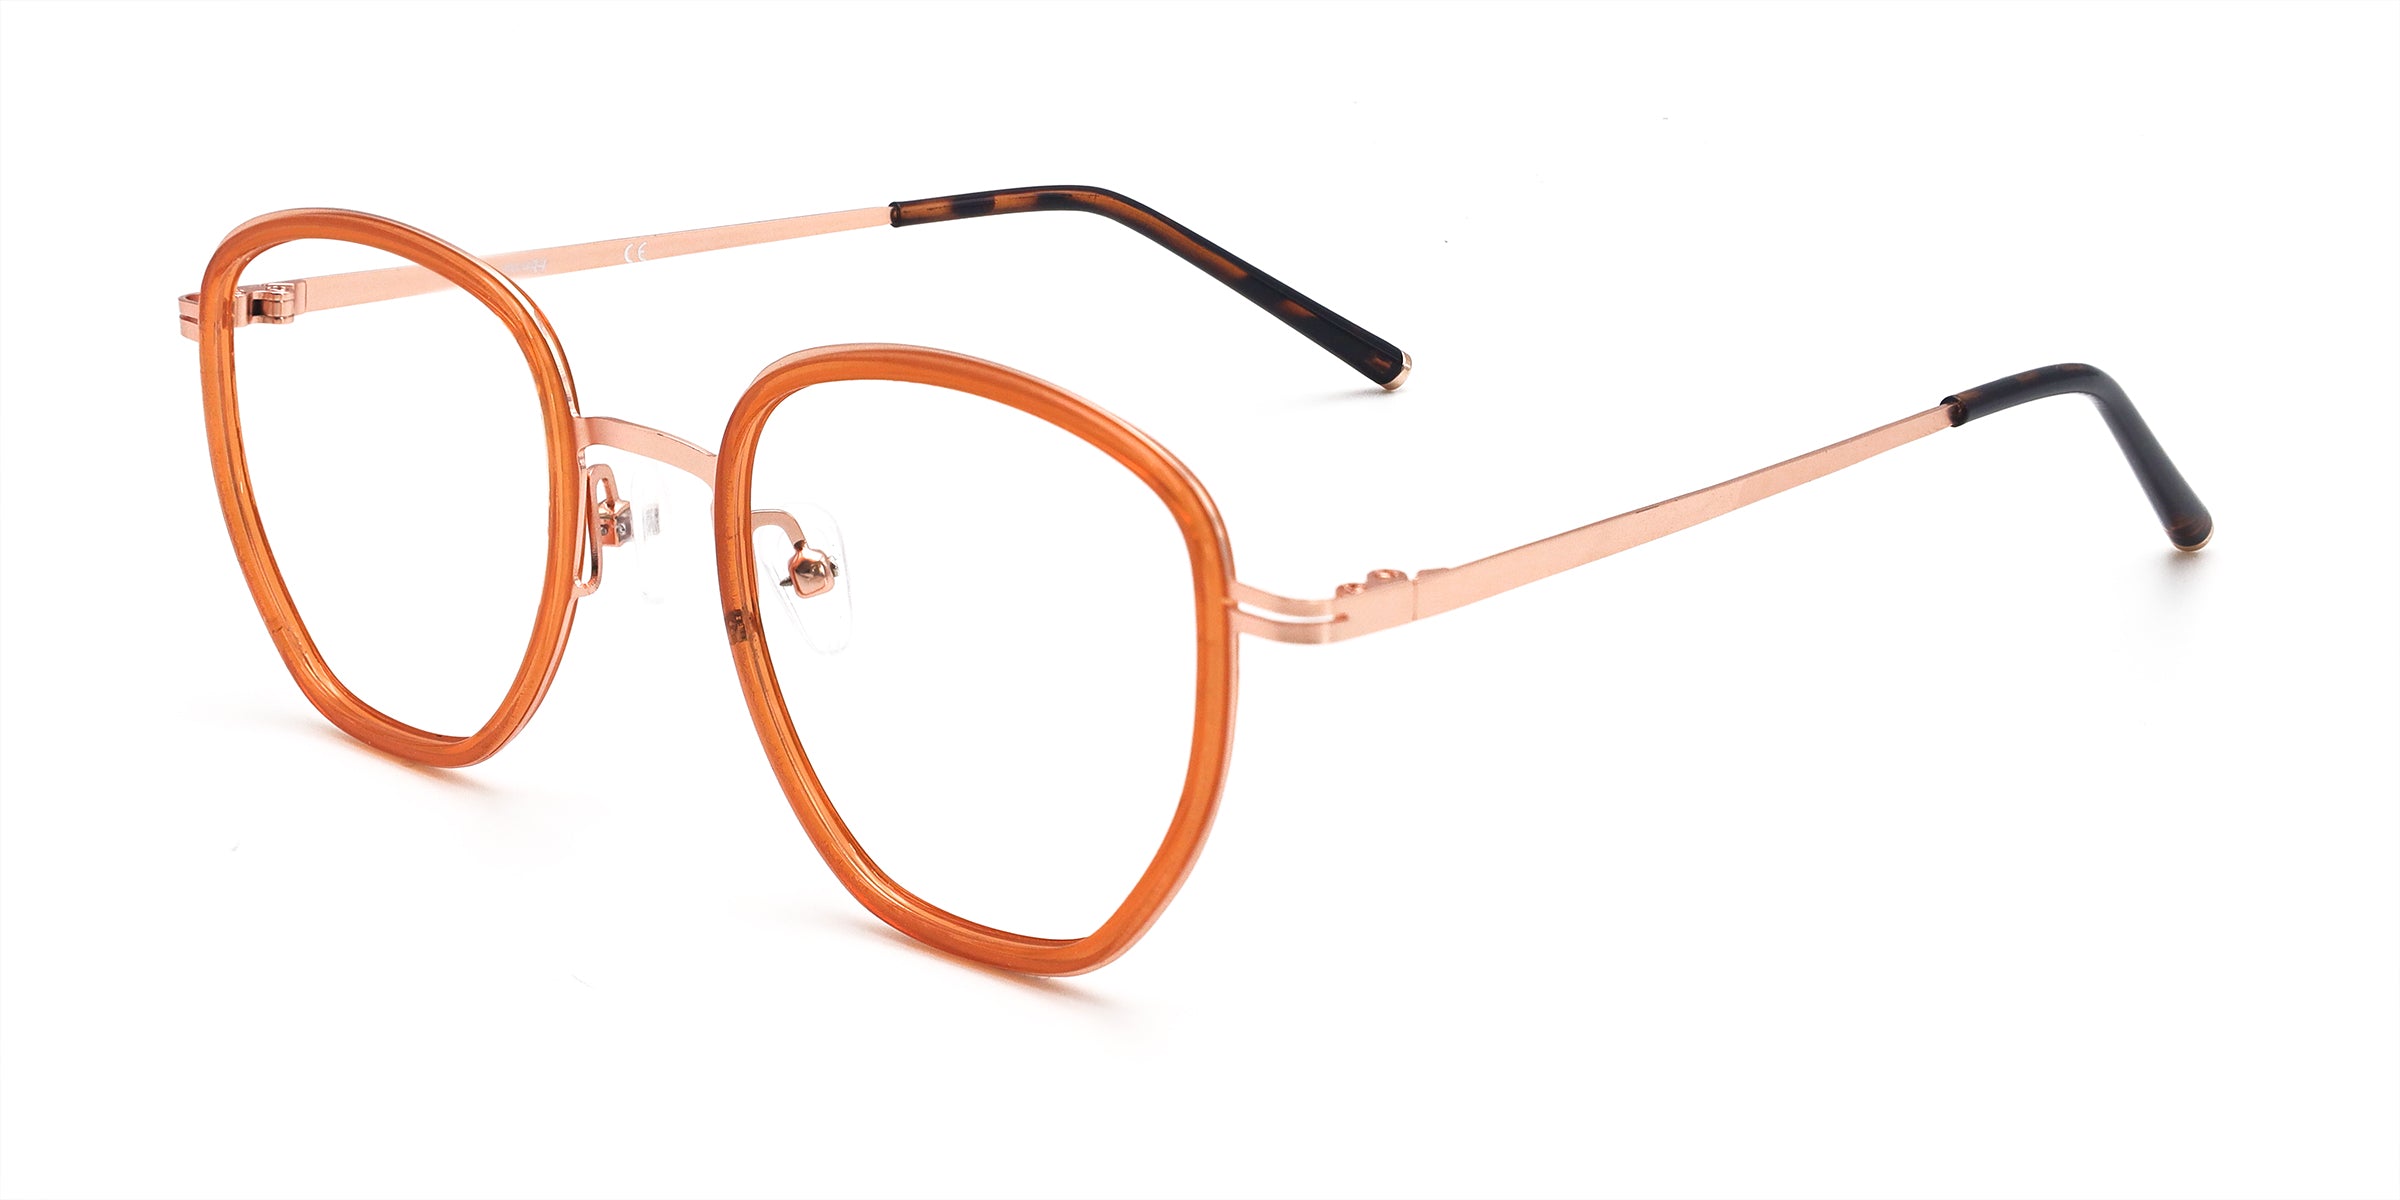 glee geometric orange eyeglasses frames angled view